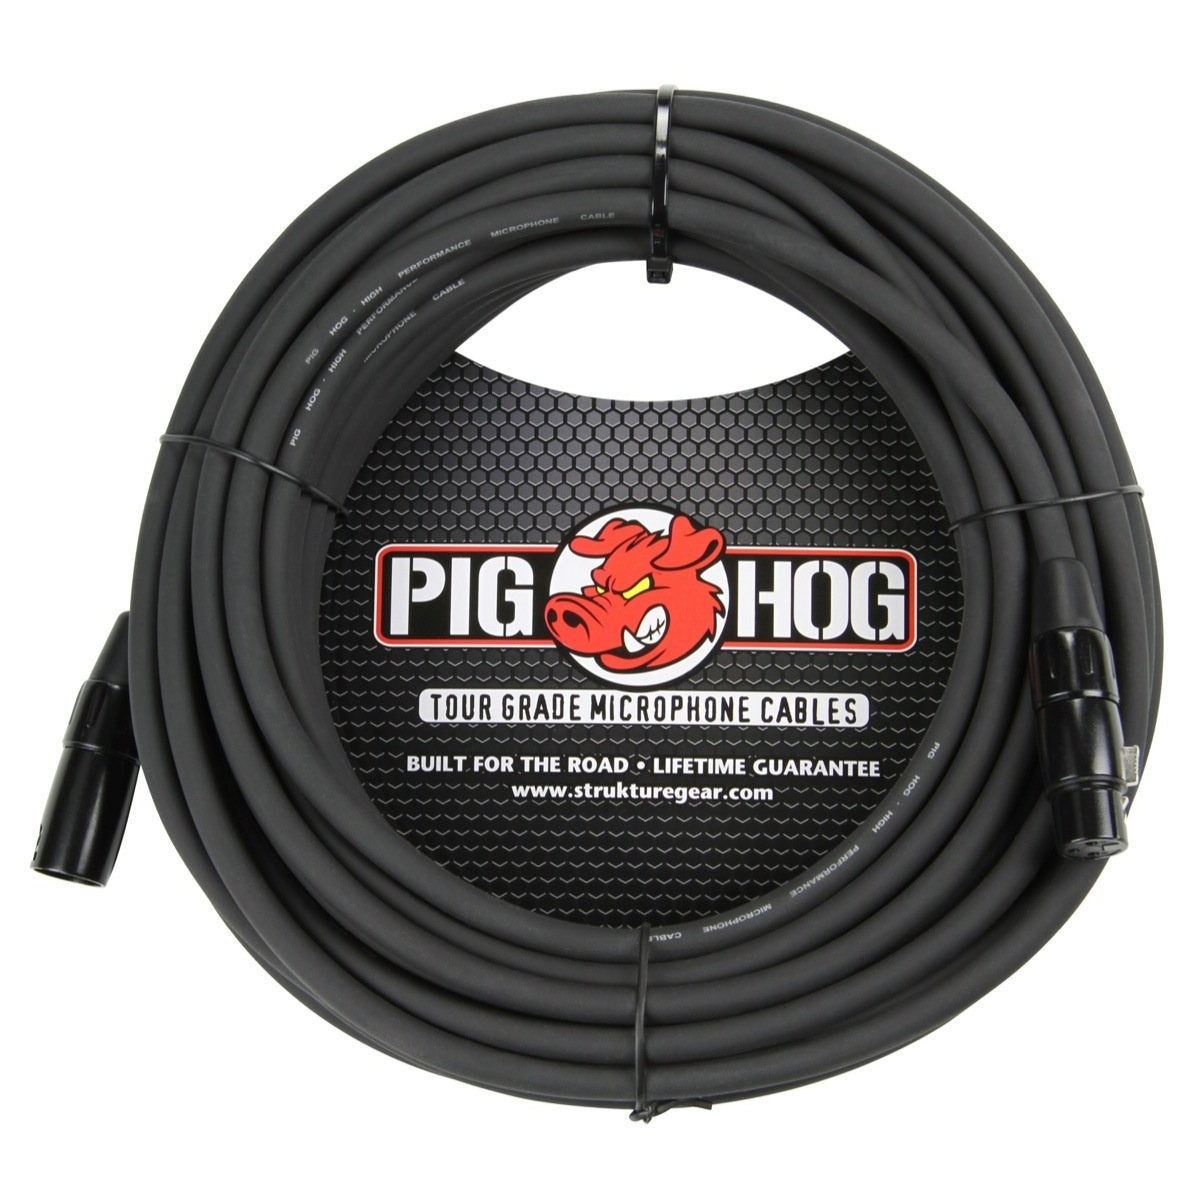 Pig Hog XLR Microphone Cable, 10 Foot